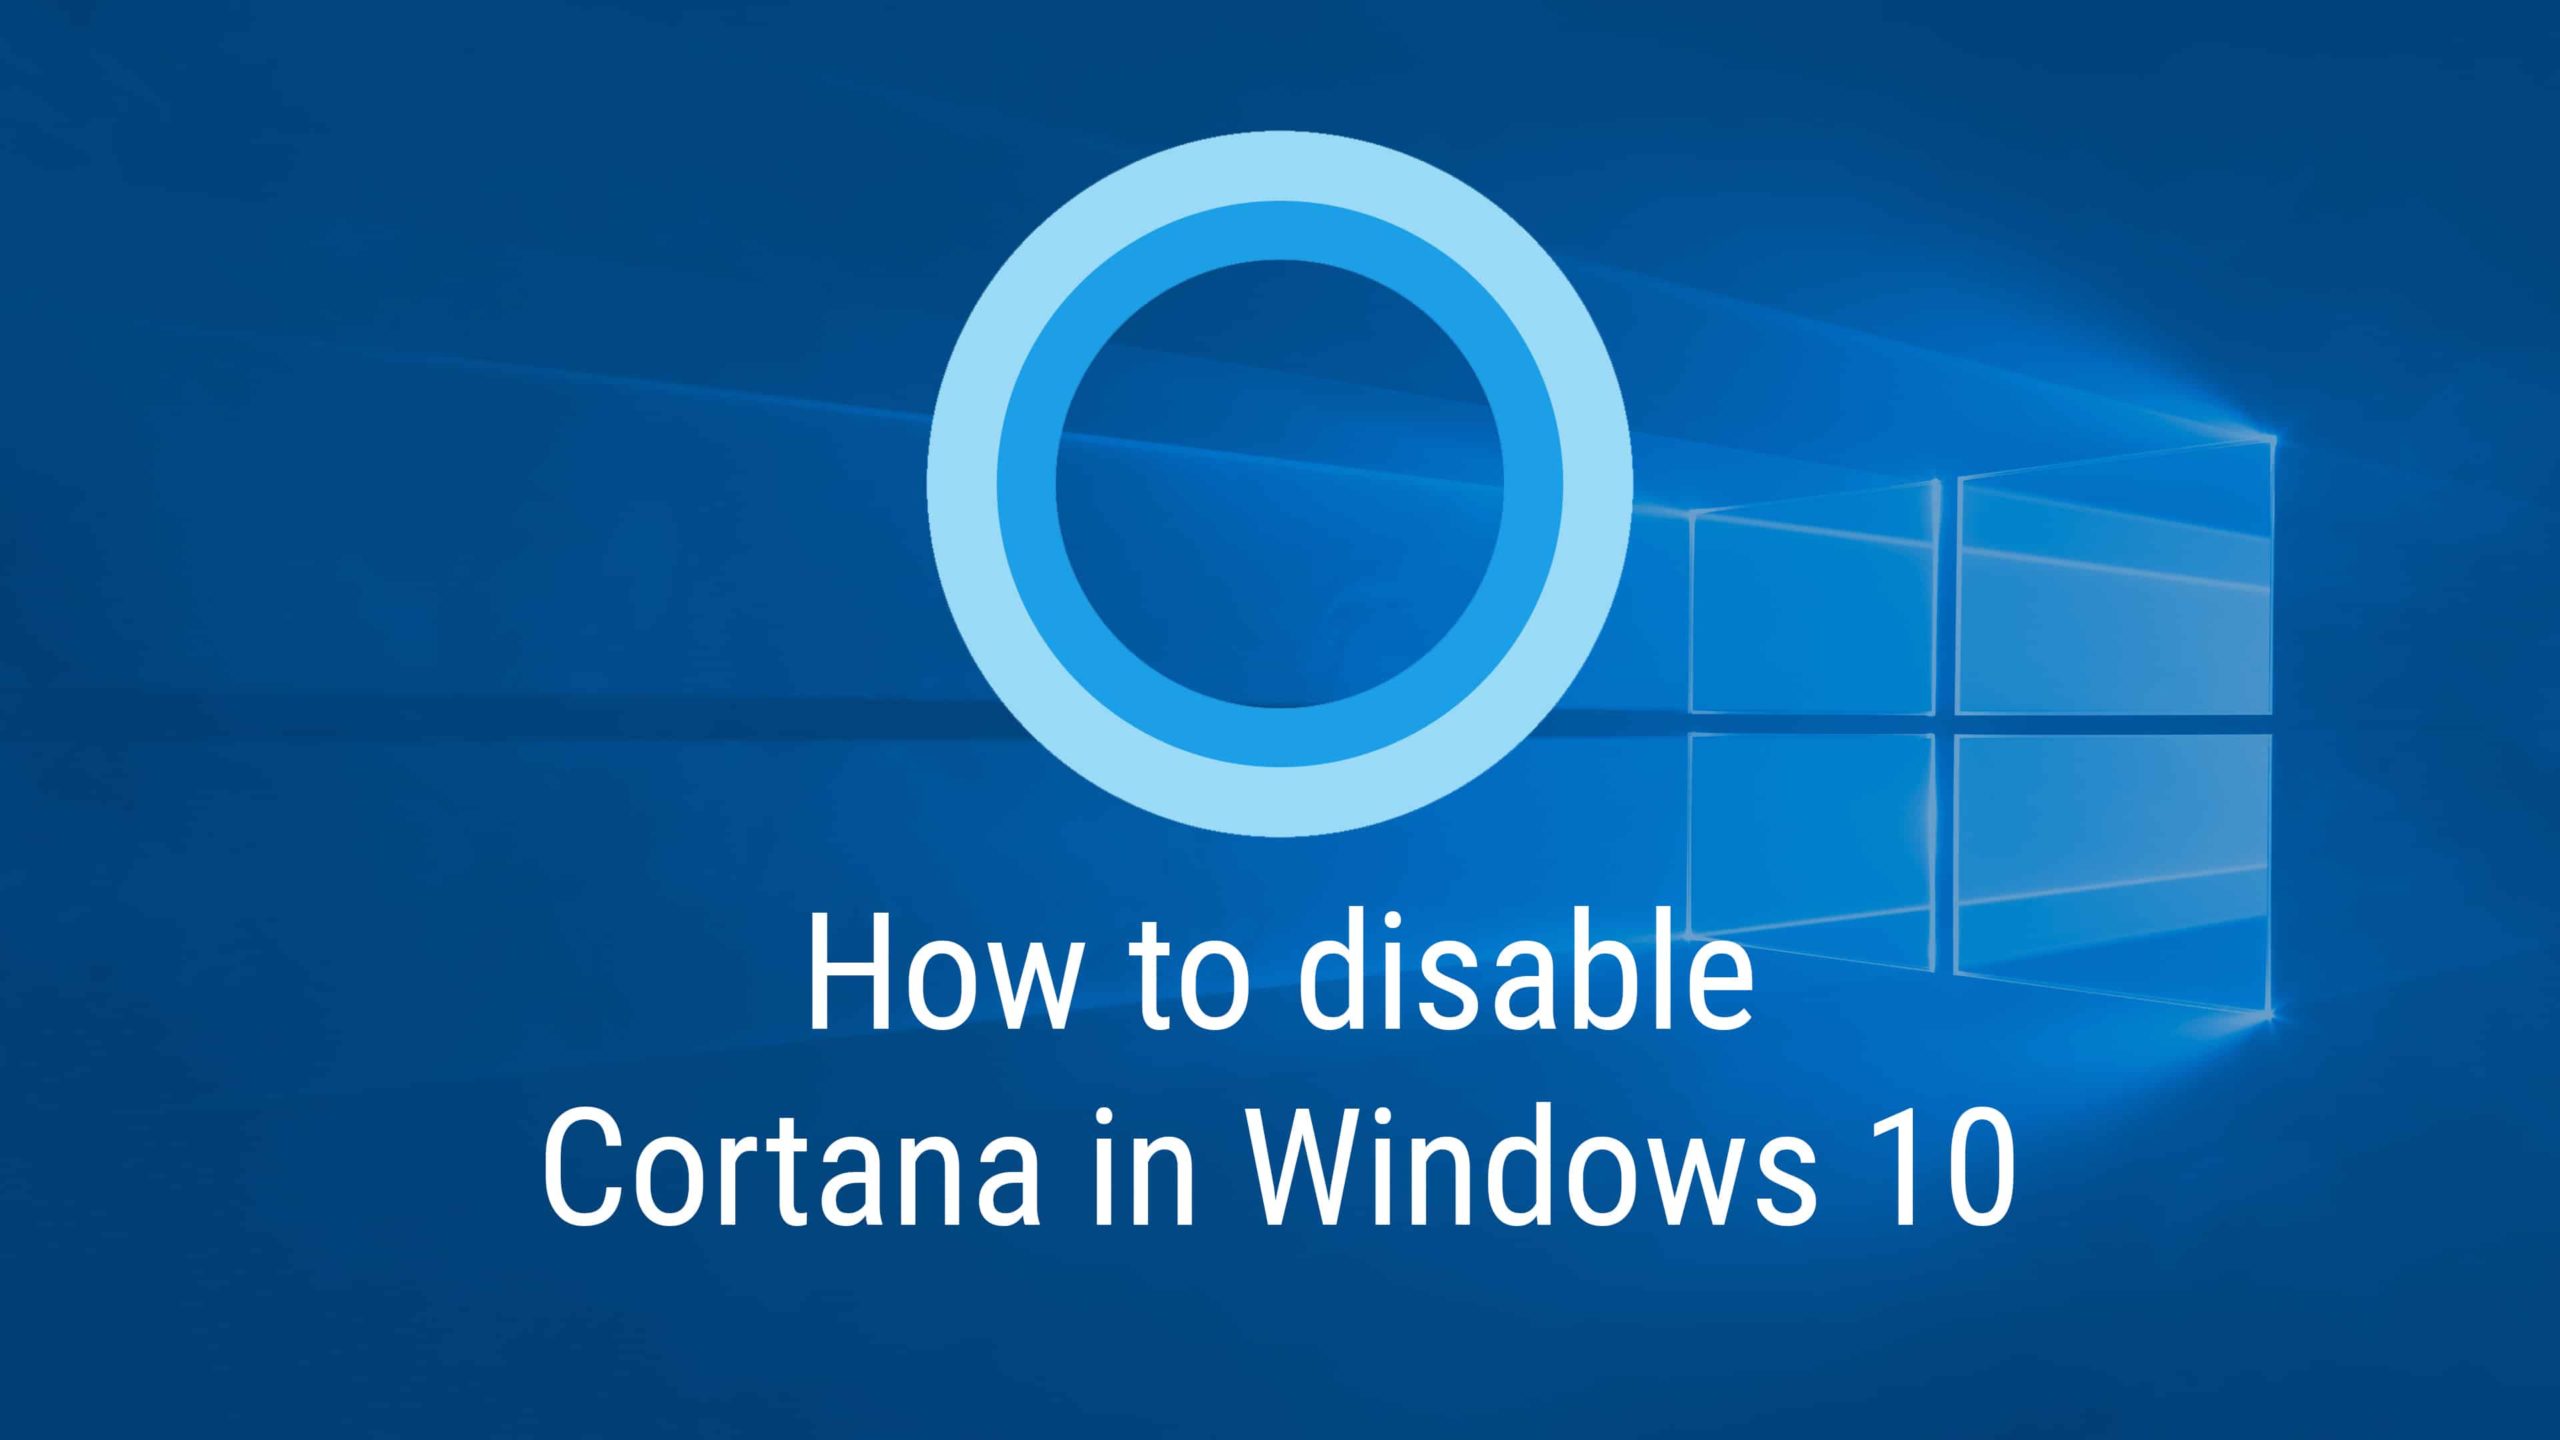 Turn off Cortana on Windows 10